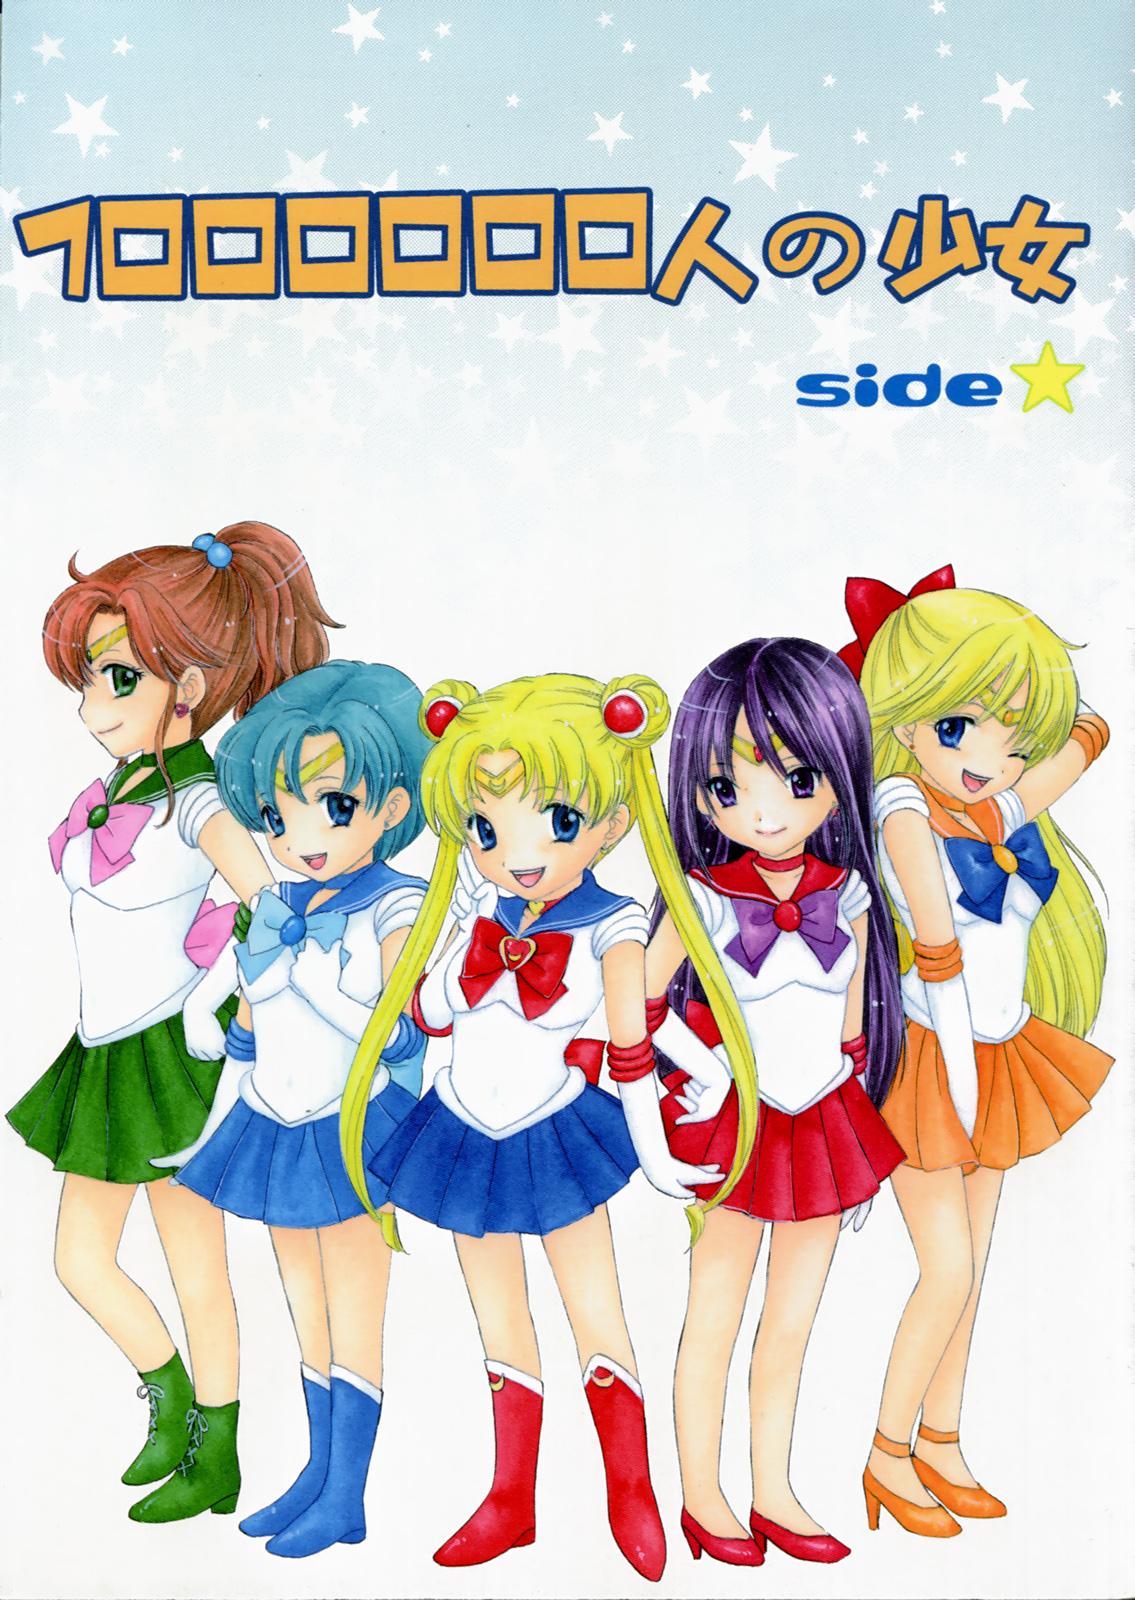 Amateur 1000000-nin no Shoujo side star - Sailor moon Boob - Picture 1